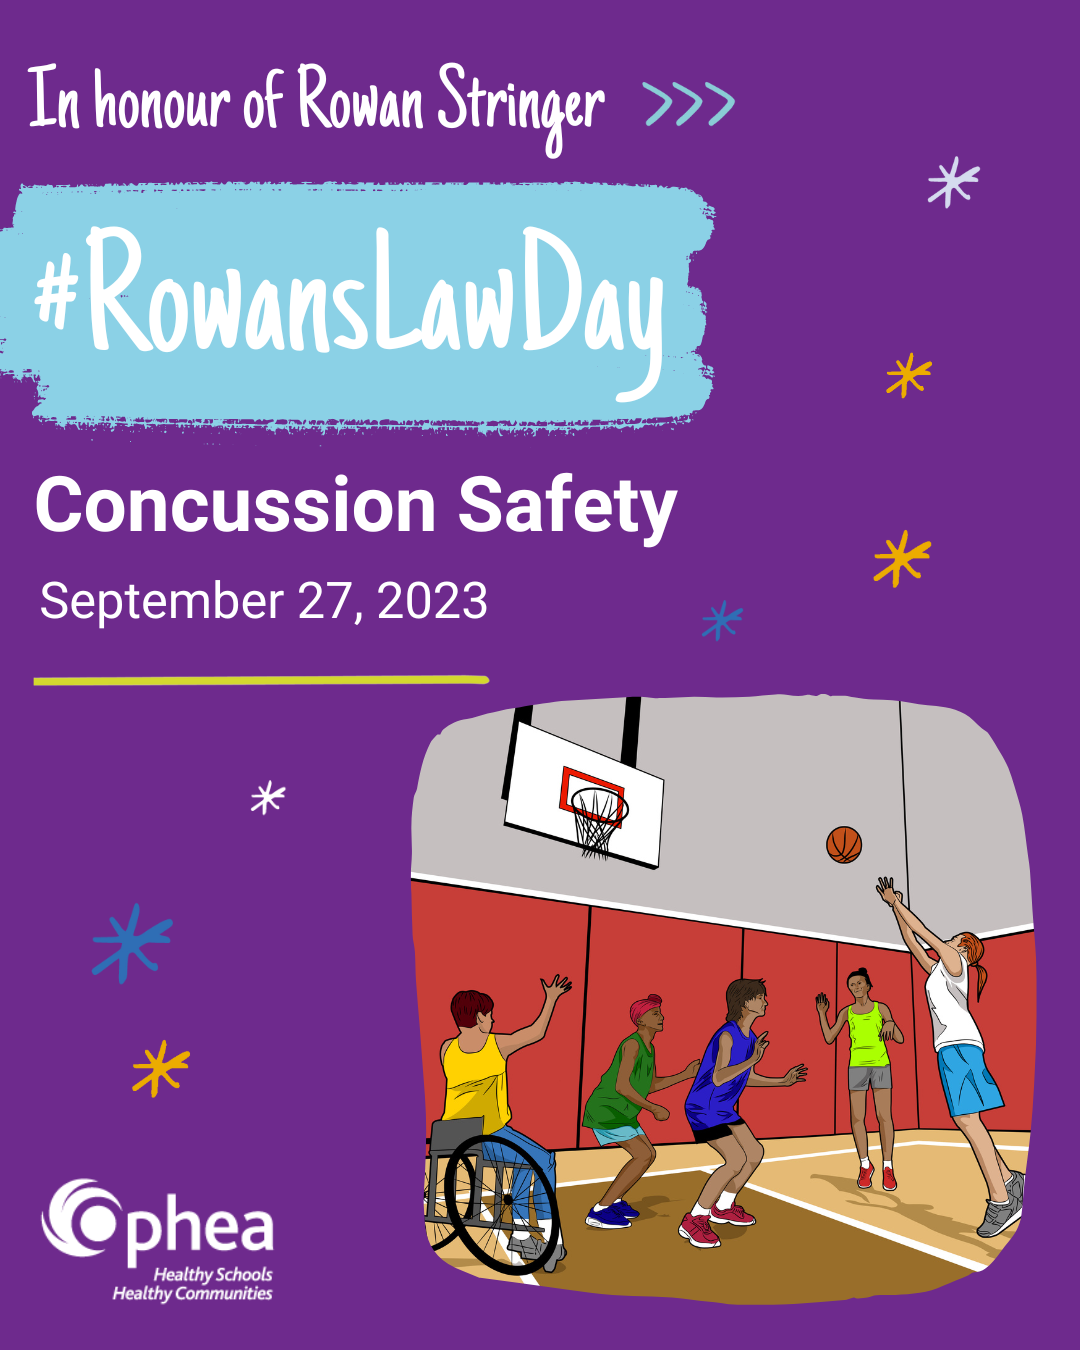 Rowan's Law Day, September 27, 2023